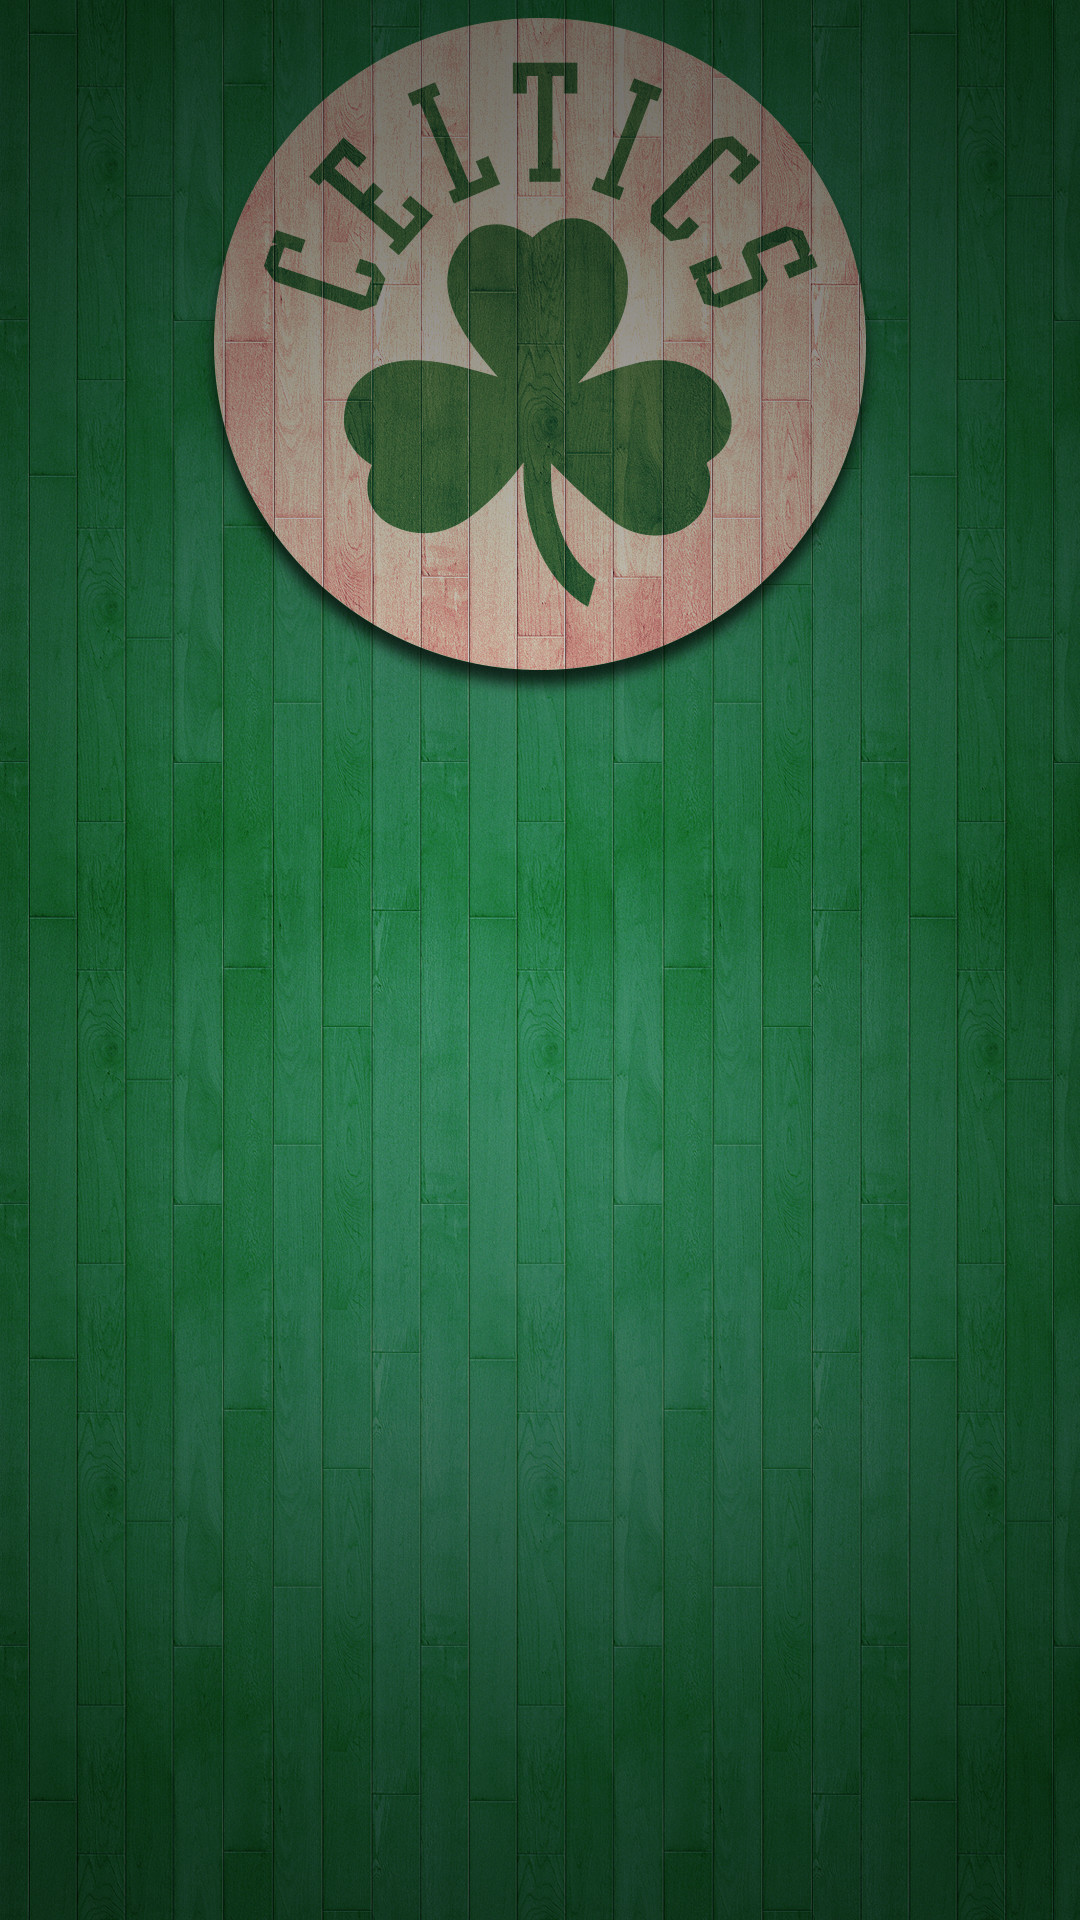 Boston Celtics Big 3 - Basketball & Sports Background Wallpapers on Desktop  Nexus (Image 48836)